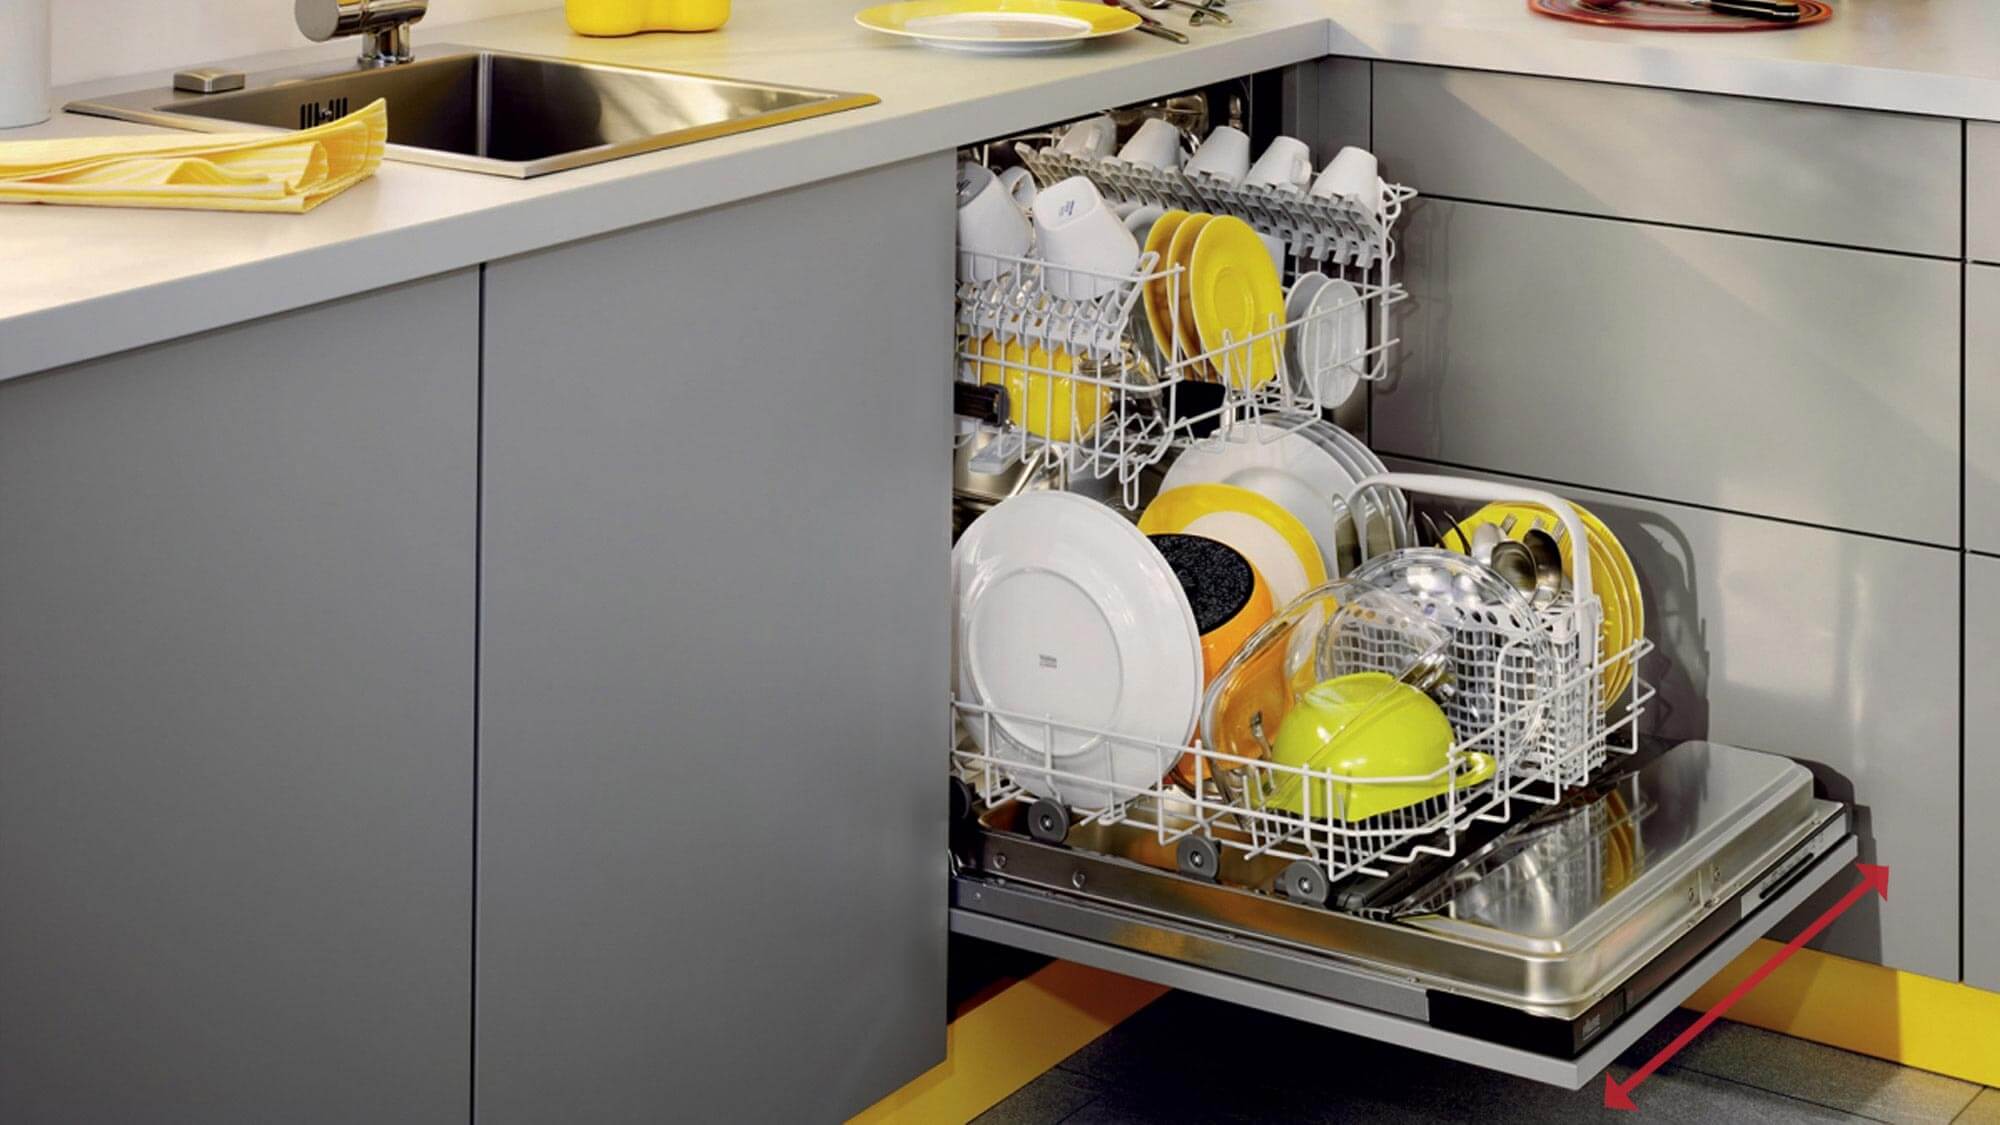 built in dishwashers uk